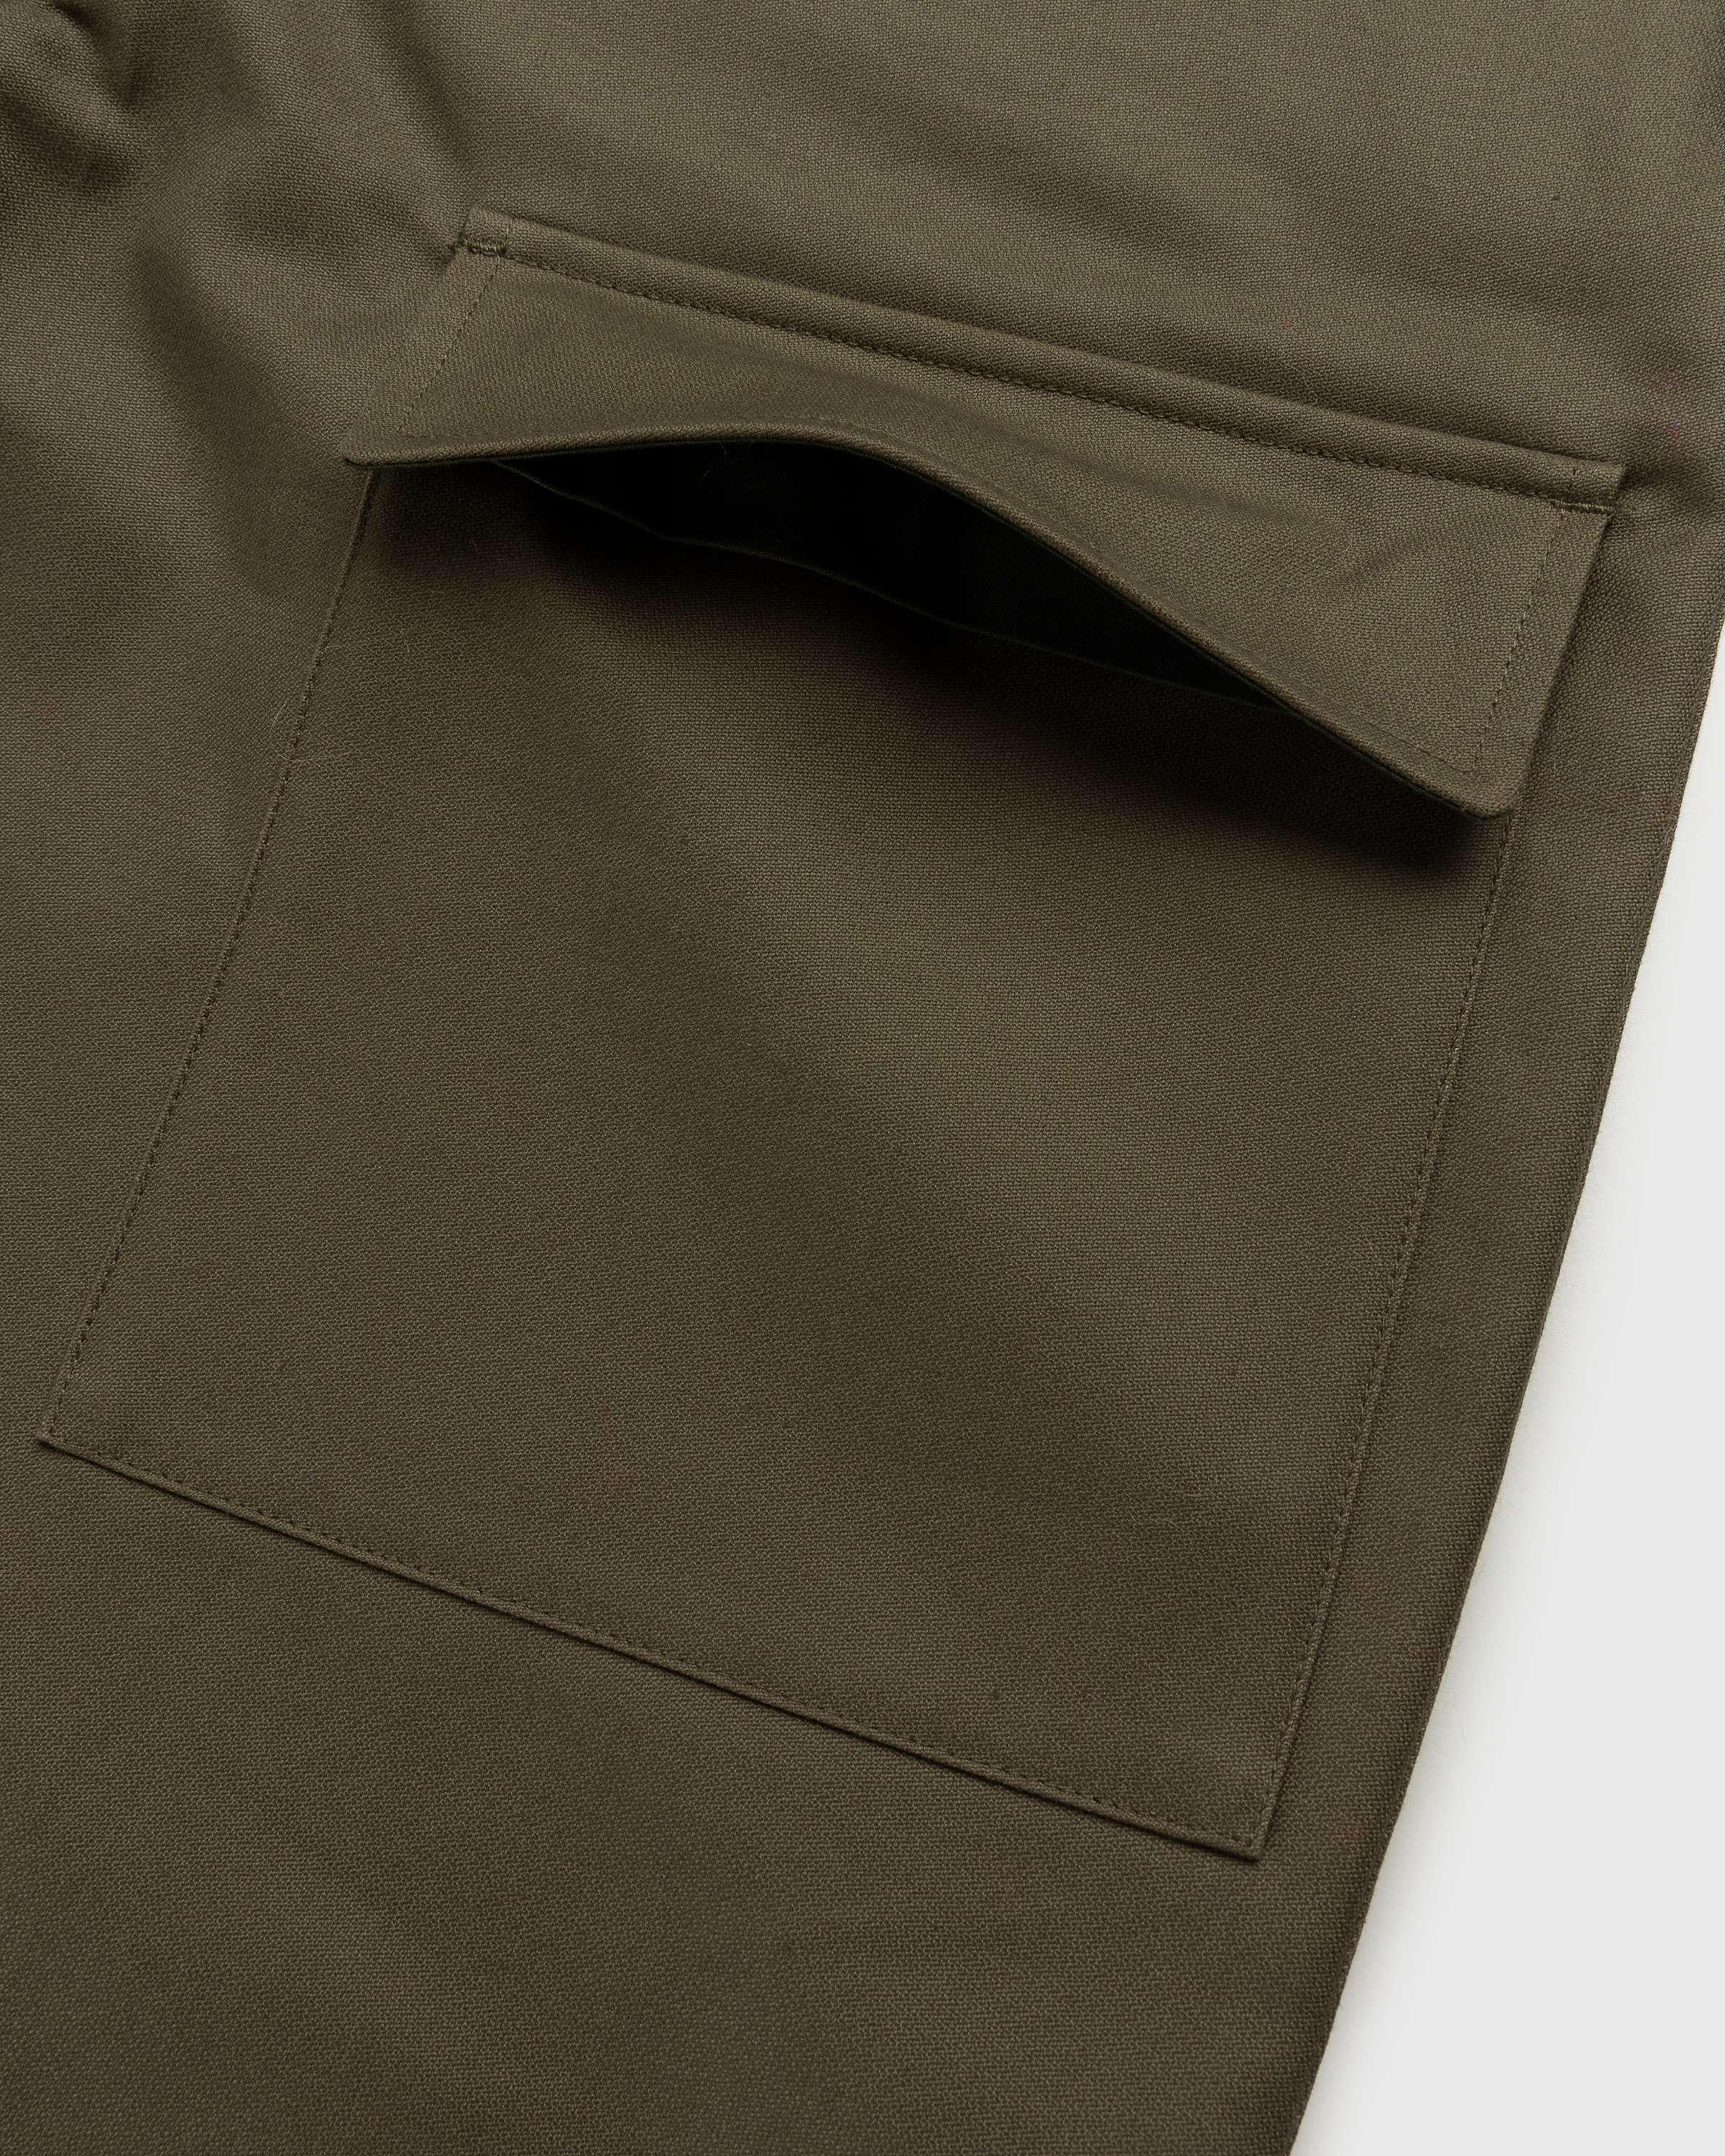 Kenzo - Tailored Pants Dark Khaki - Clothing - Green - Image 6